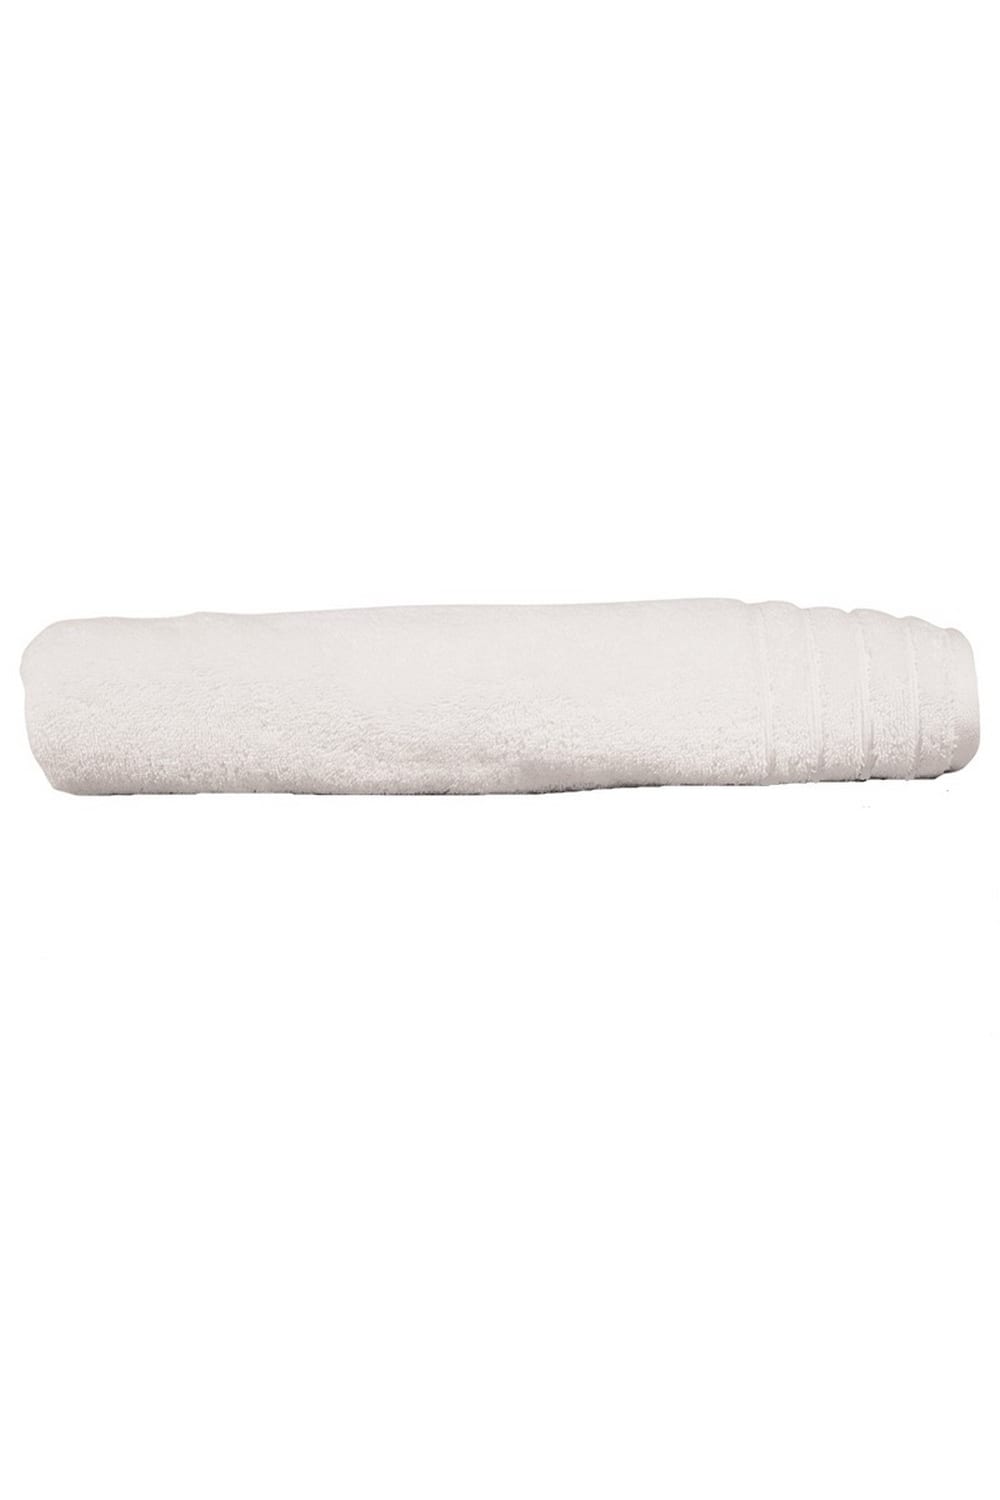 A&R Towels Organic Bath Towel (White) (One Size)